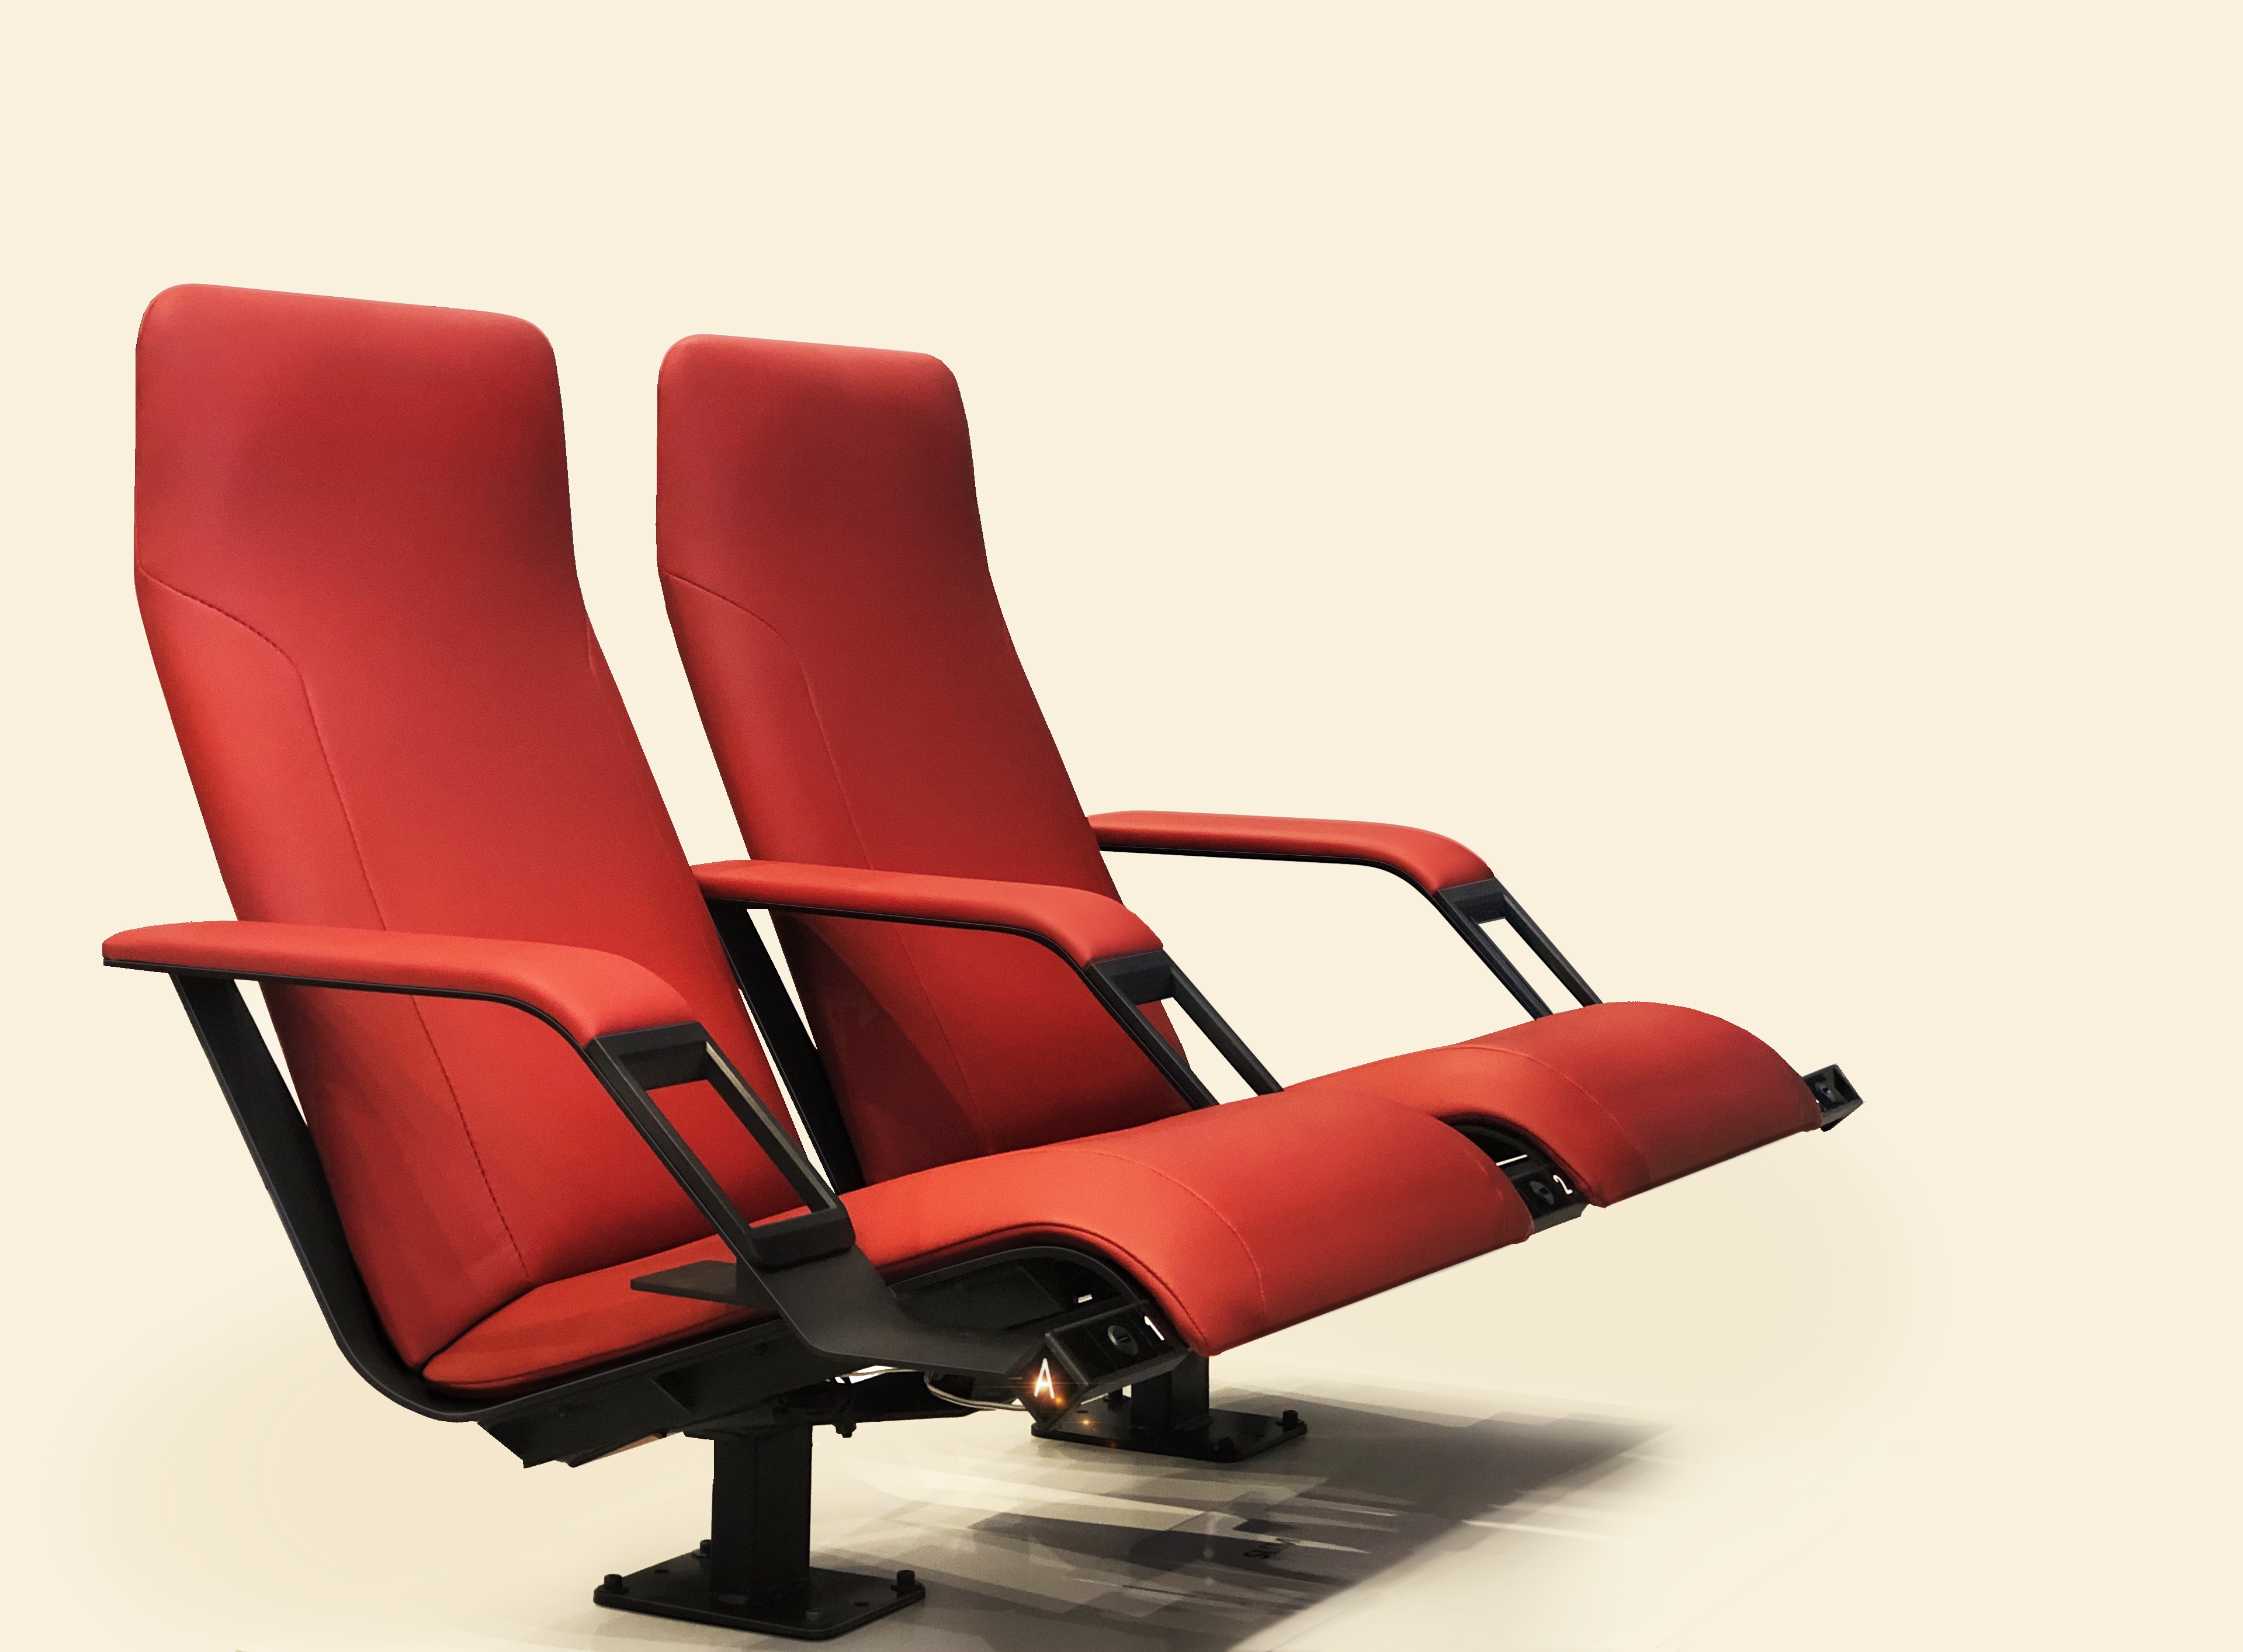 MUSE Design Winners - SLIM Seating System